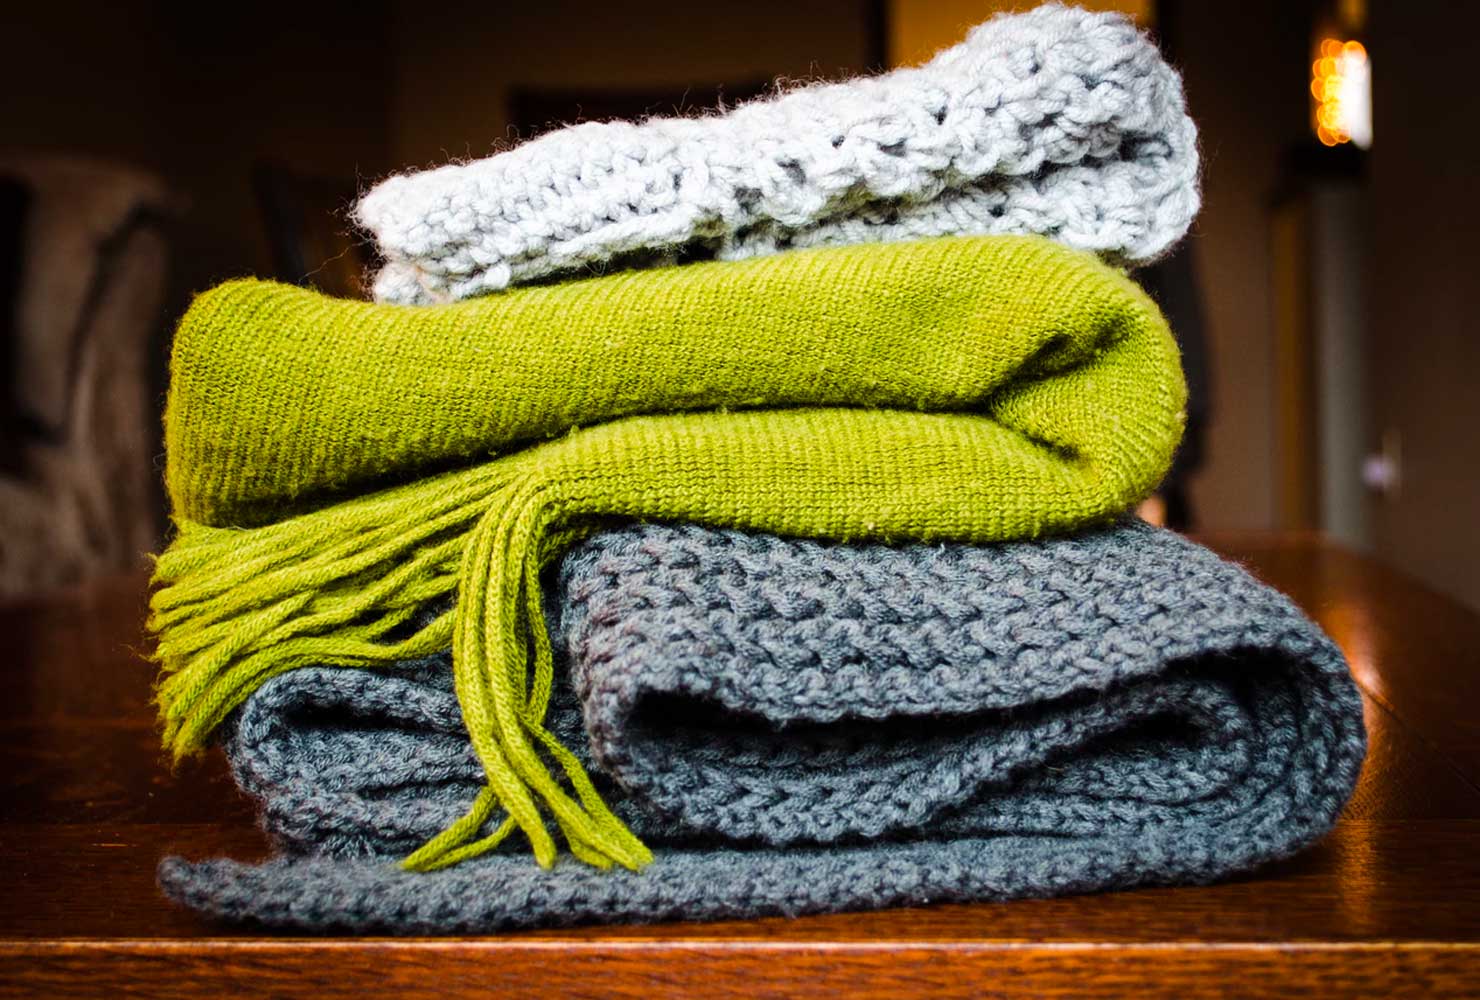 20 dollar gift ideas woven blankets 